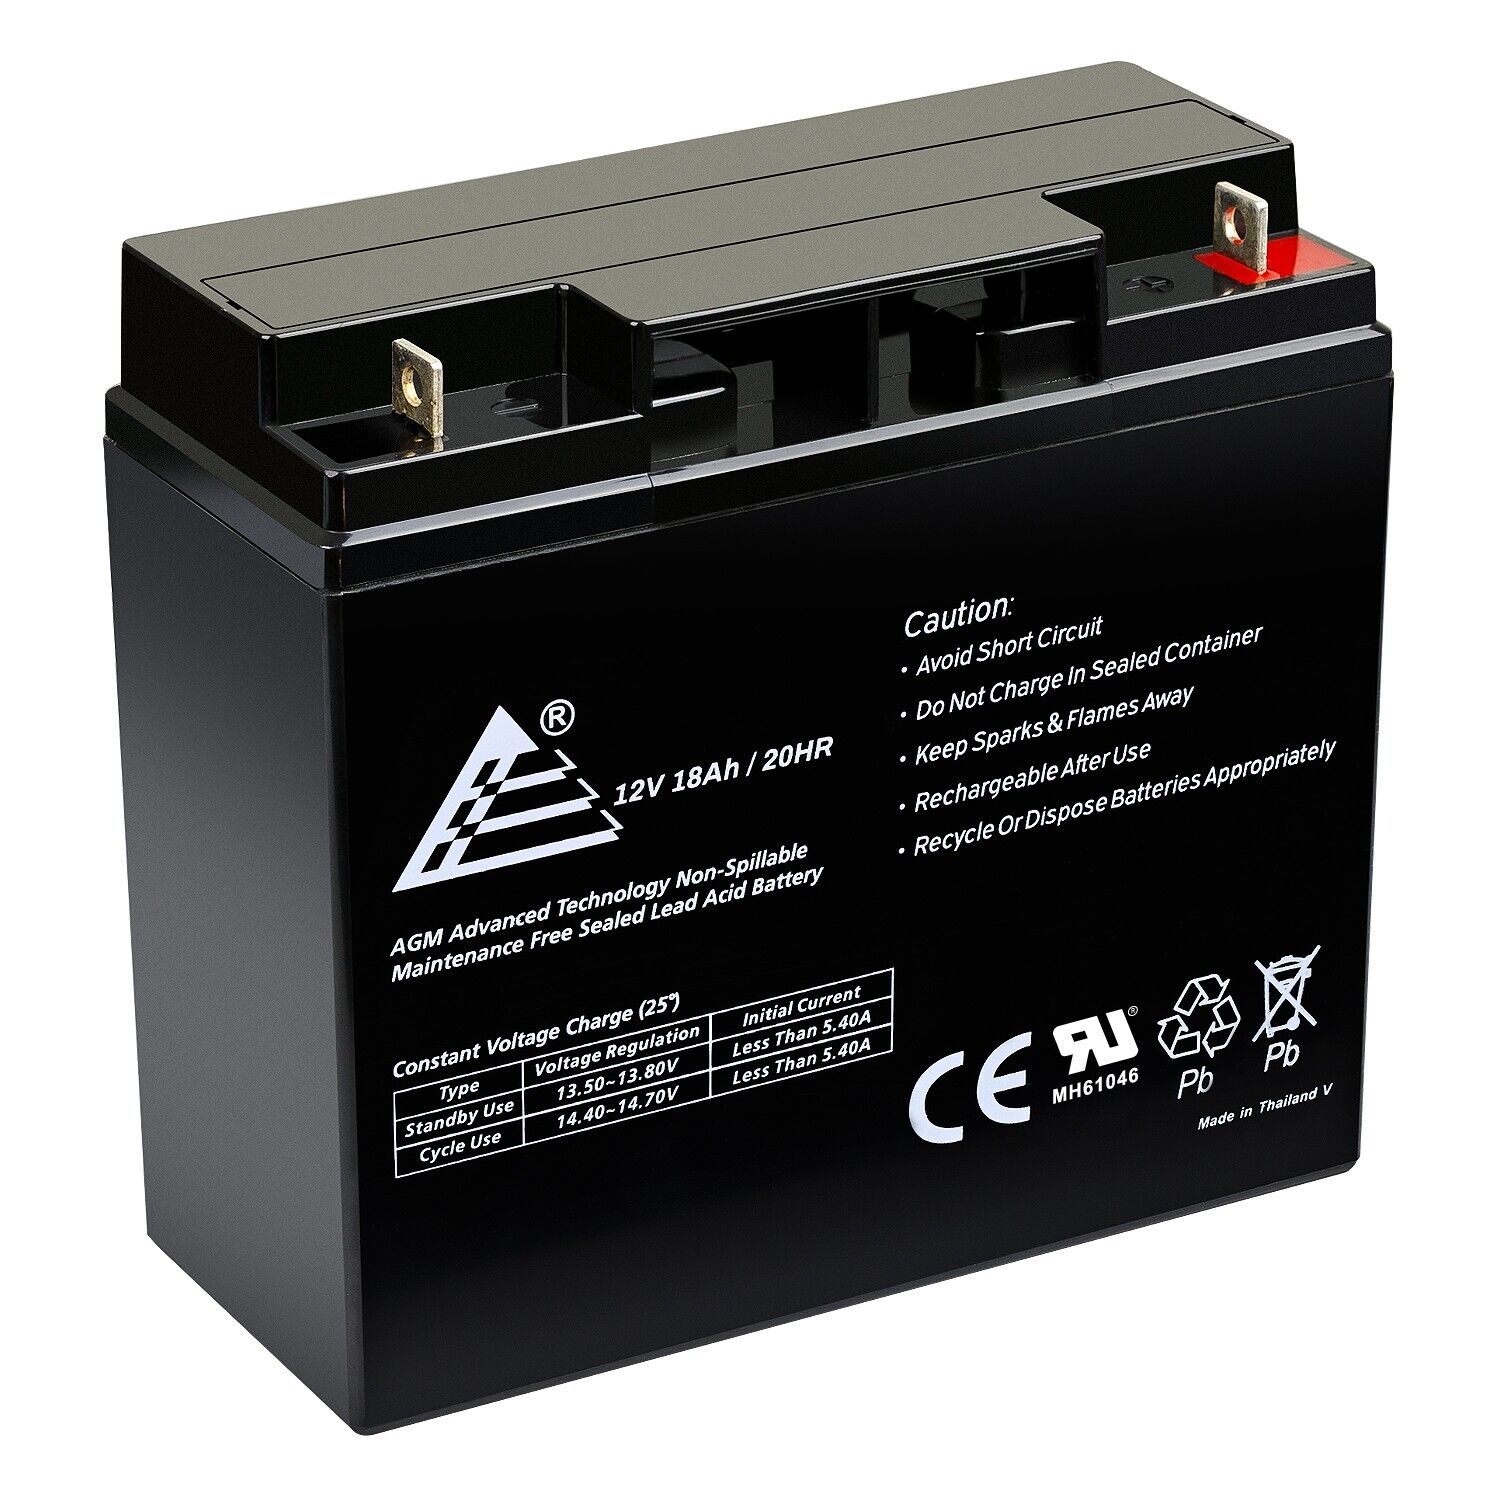 12V 18AH SLA Battery replaces PE12V17 Sealed Lead Acid AGM Replaces 12V 17Ah